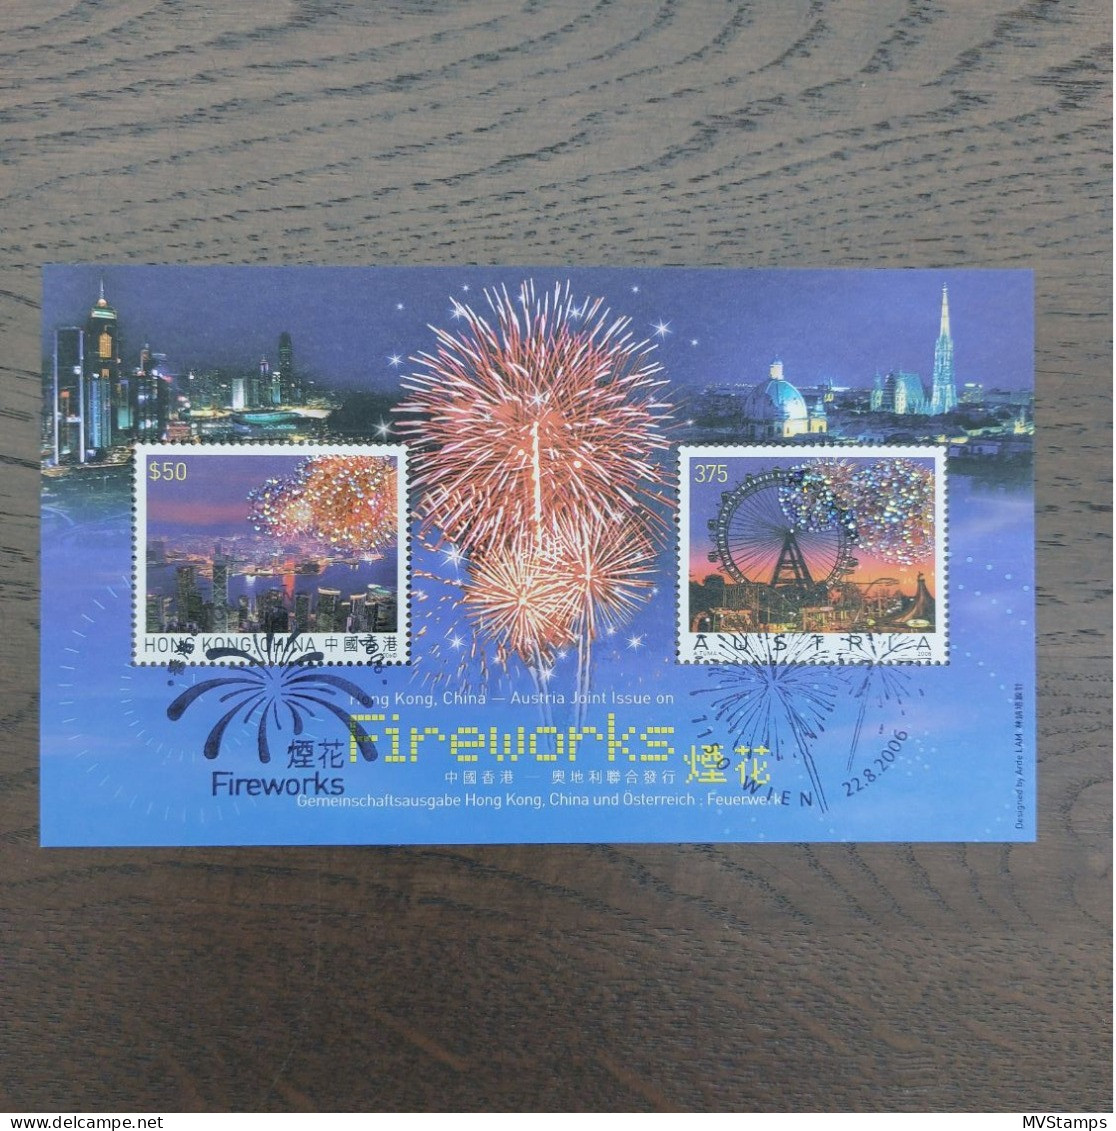 Austria (Hong Kong) 2006 Sheet Fireworks Stamps (Michel Block 35) Used - Blocks & Sheetlets & Panes